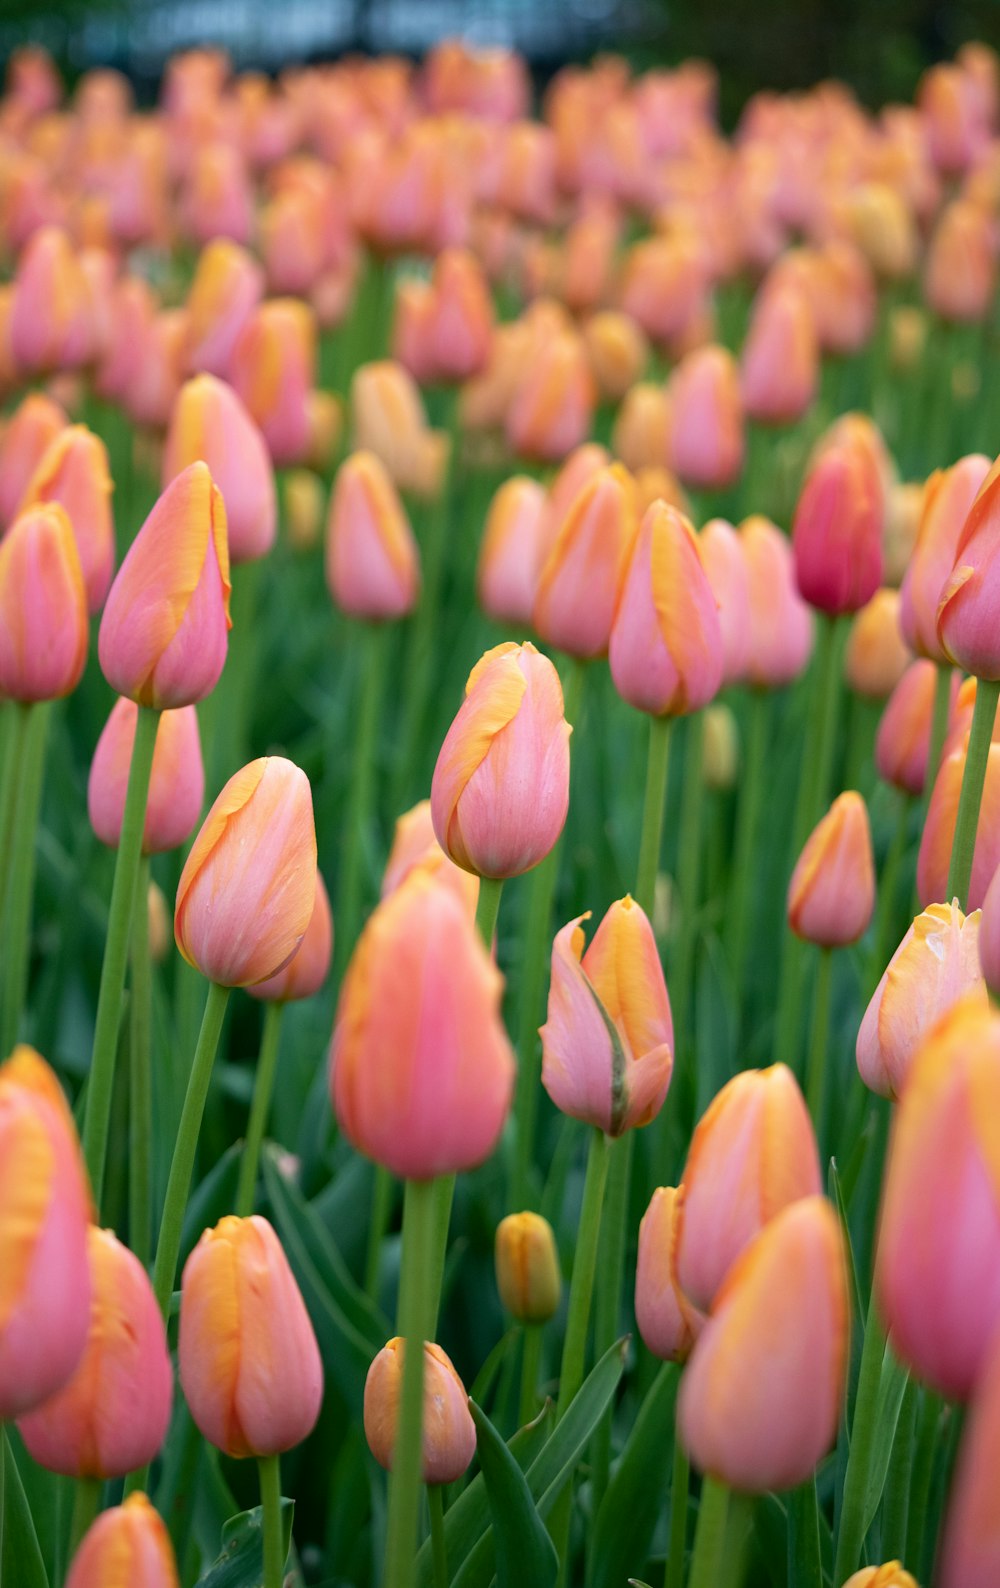 champ de fleurs de tulipes roses